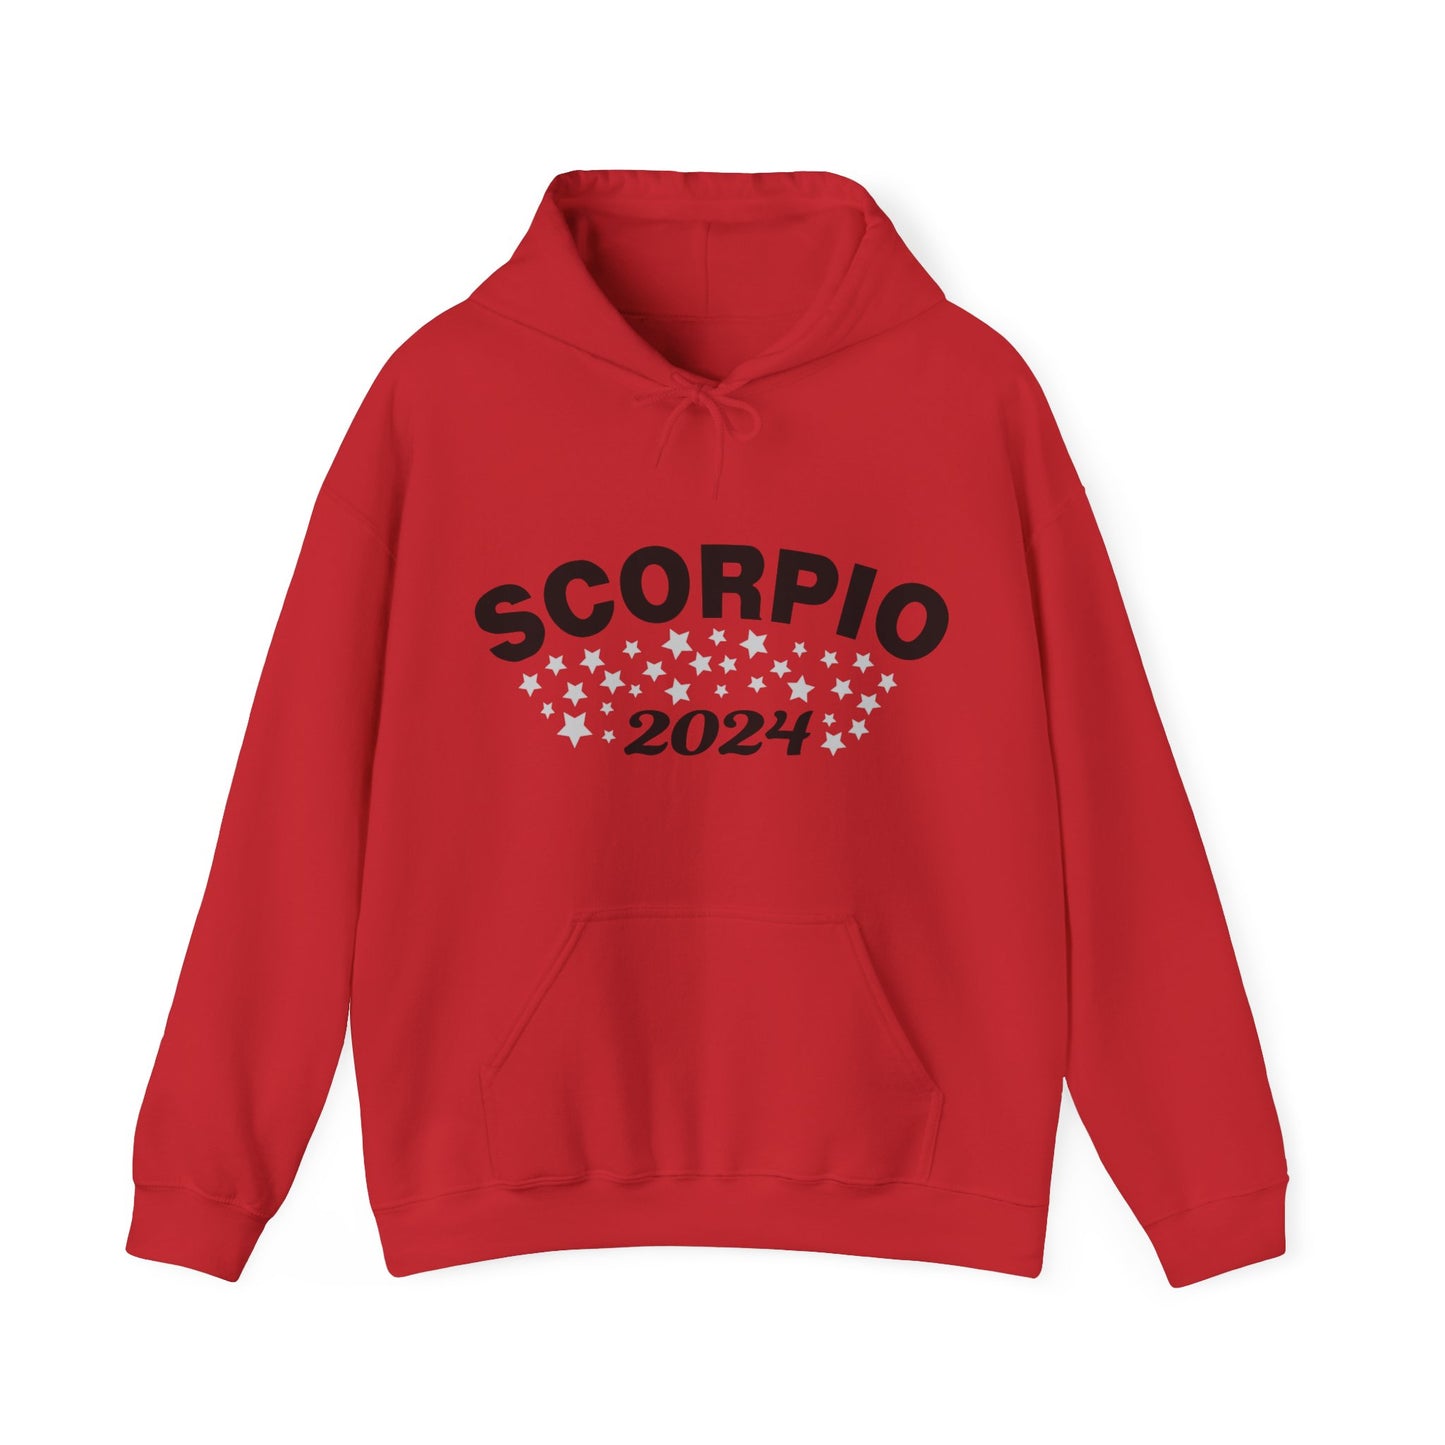 Scorpio Hoodie 2024